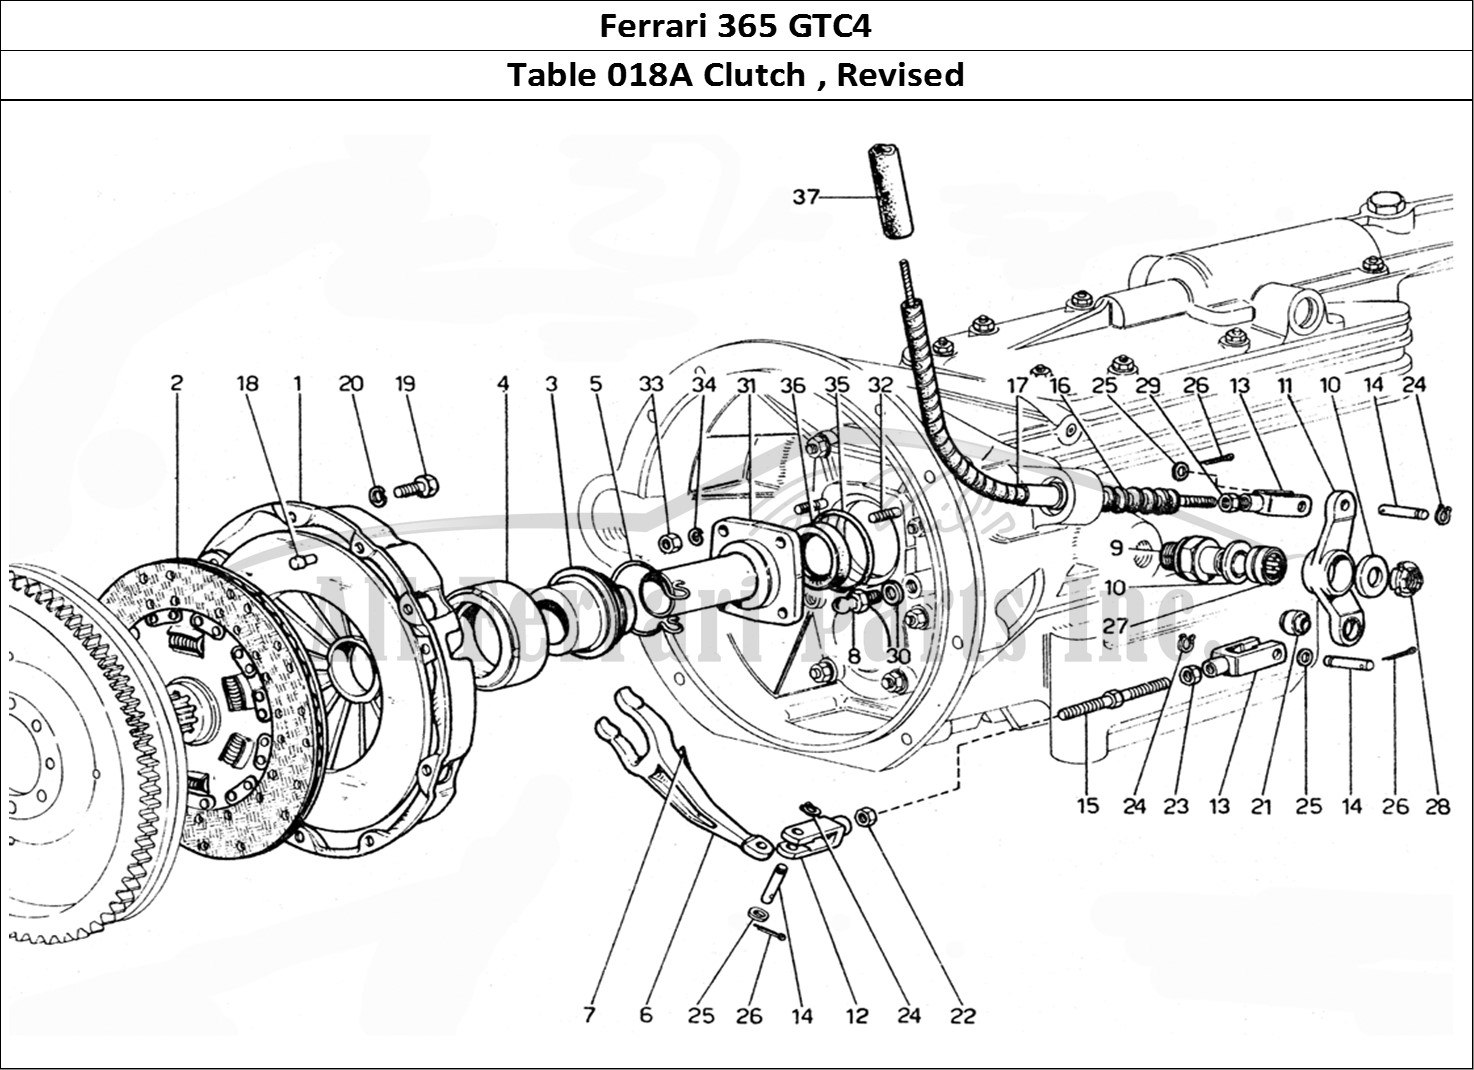 Ferrari Parts Ferrari 365 GTC4 (Mechanical) Page 018 Clutch - Revision